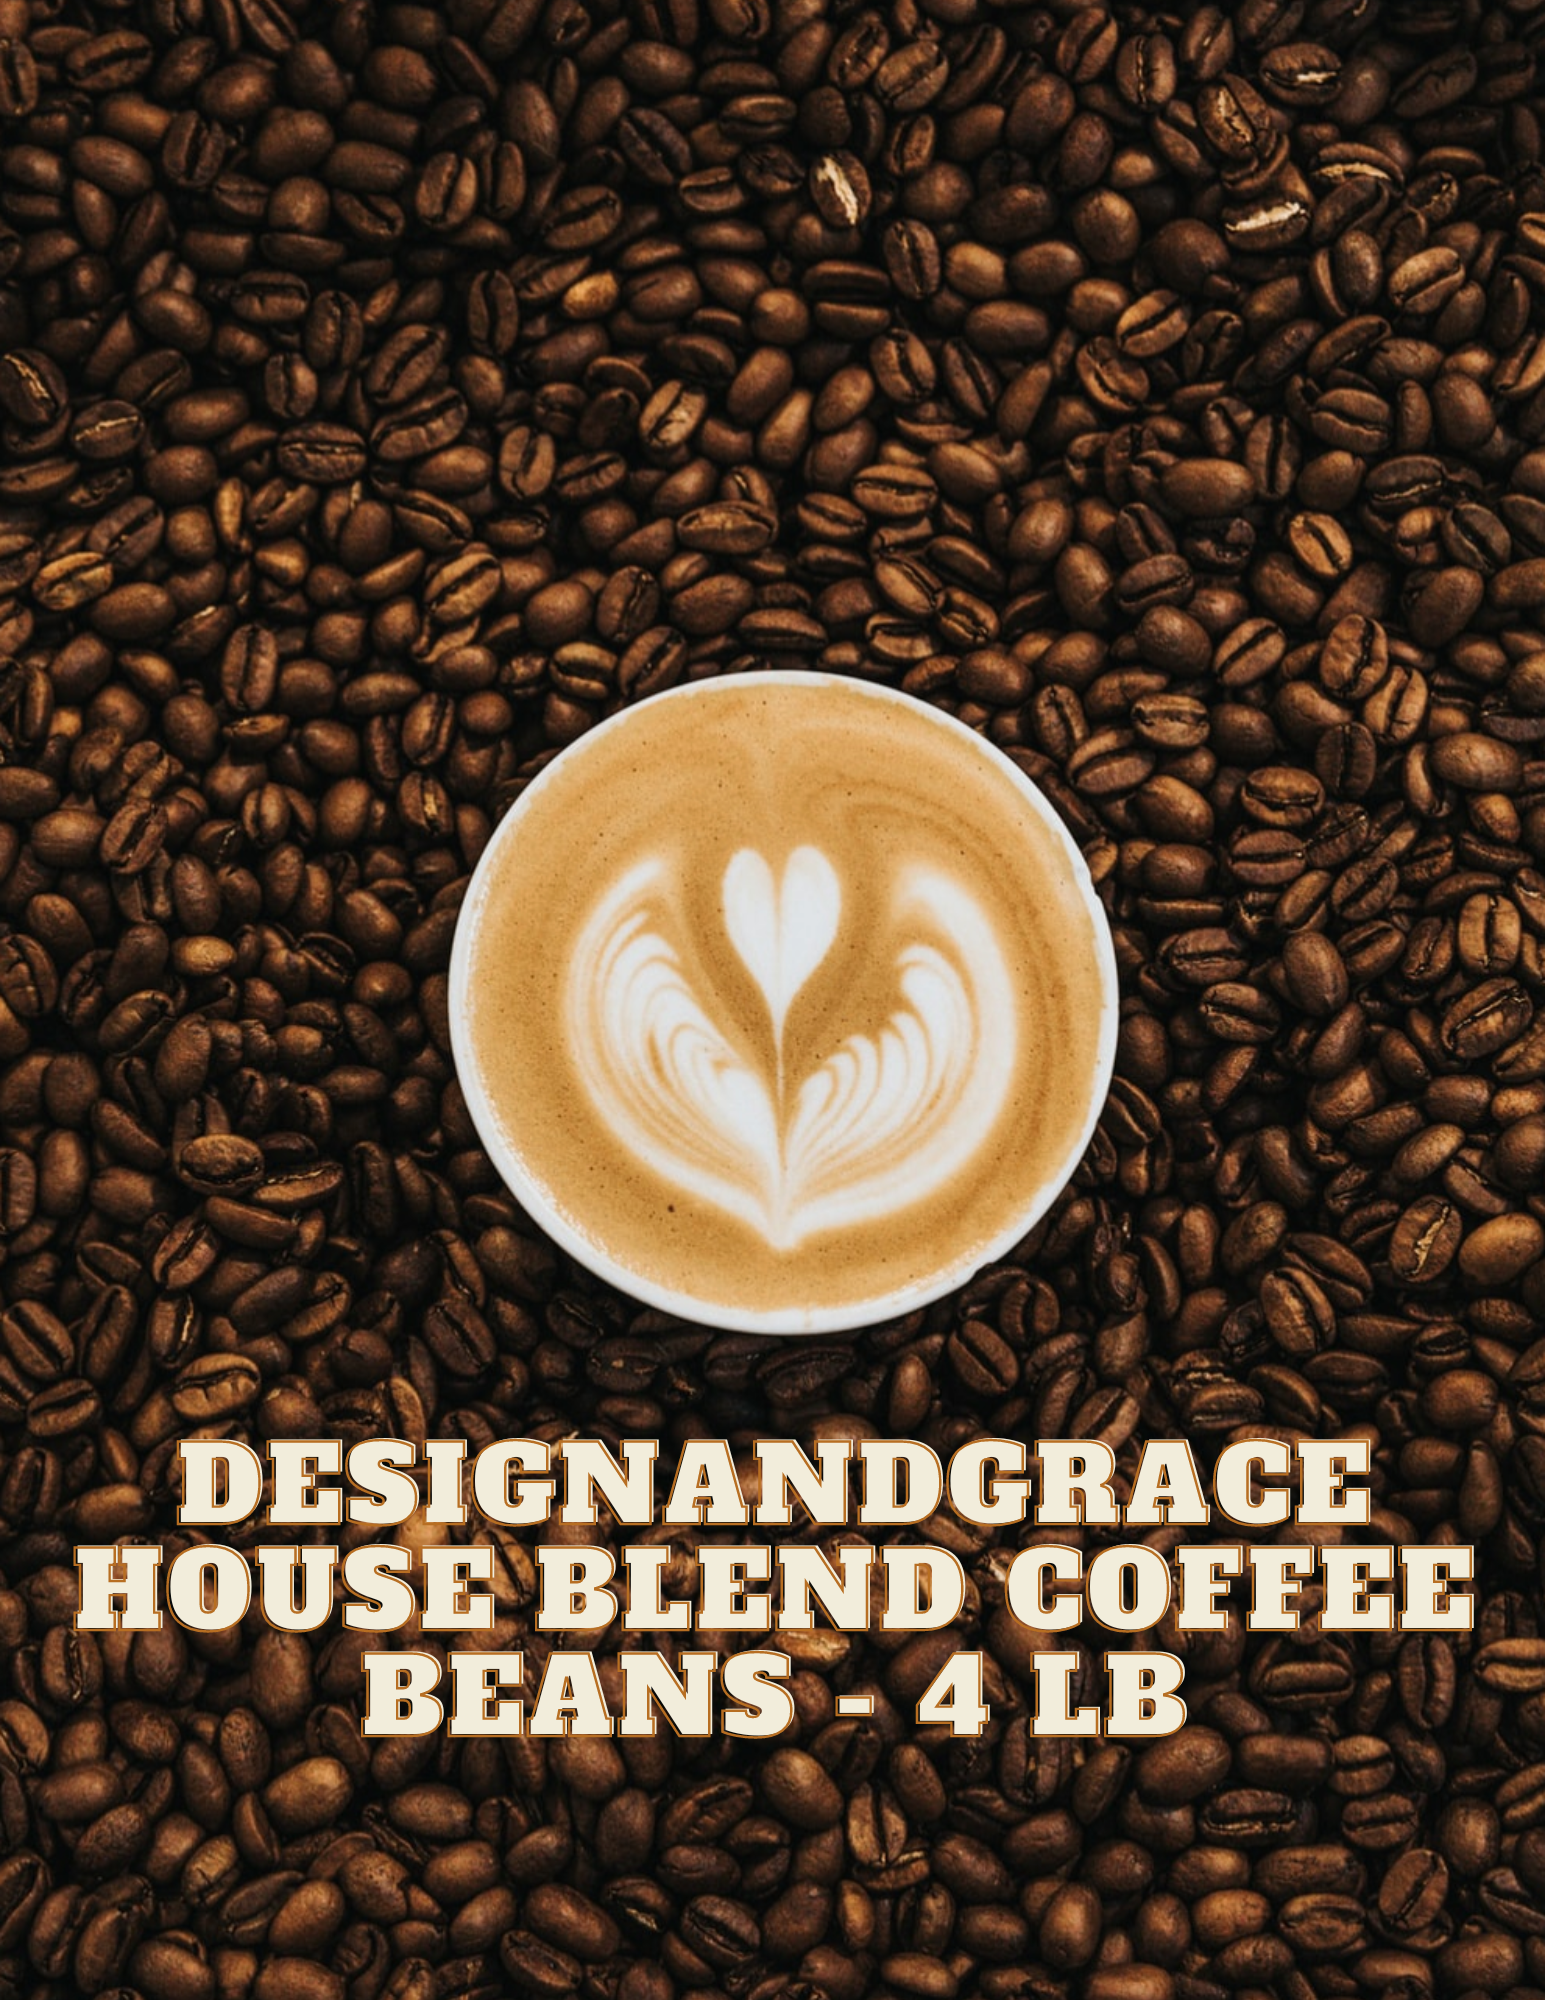 DesignandGrace House Blend Coffee Beans - 4 lb